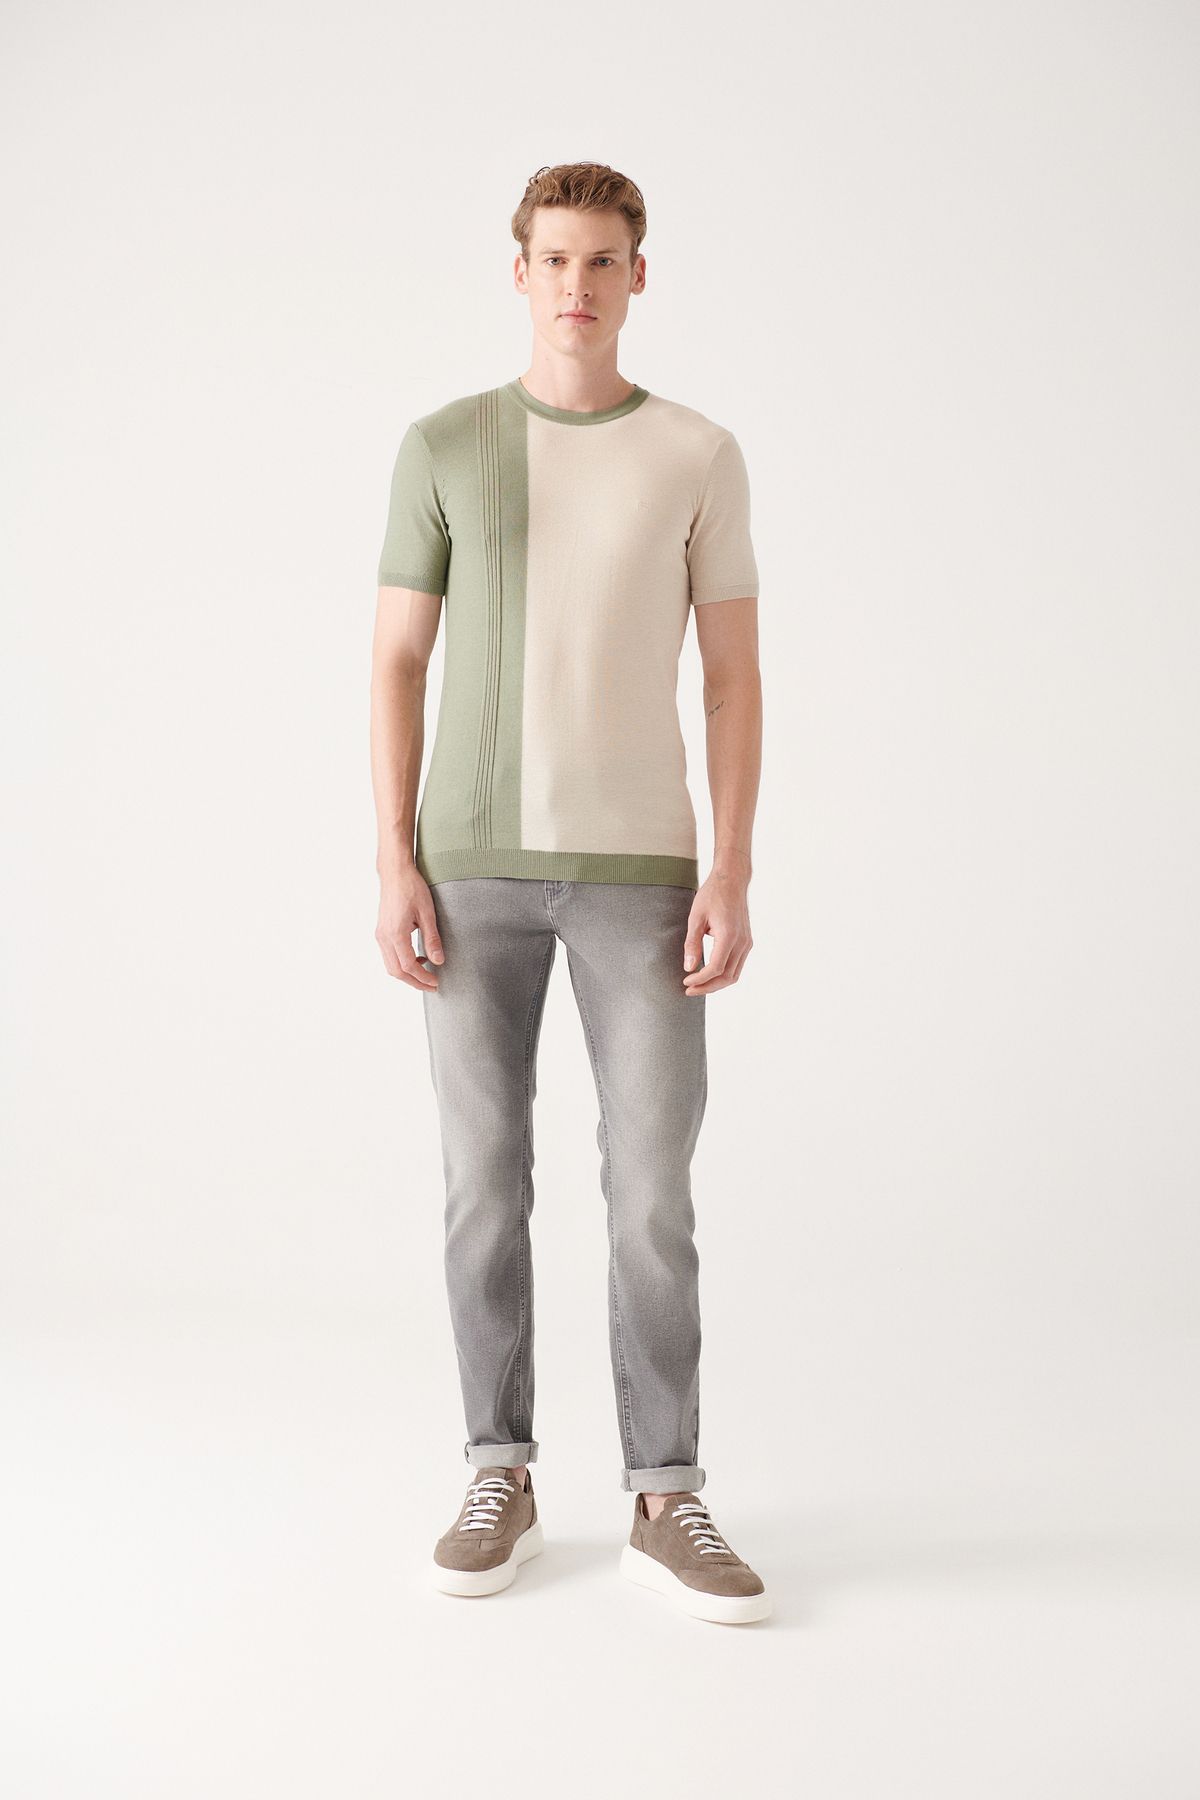 Avva تی شرت بافتنی برش معمولی مردانه یقه سبز آبی بلوک رنگی آجدار با تناسب استاندارد A31Y5123